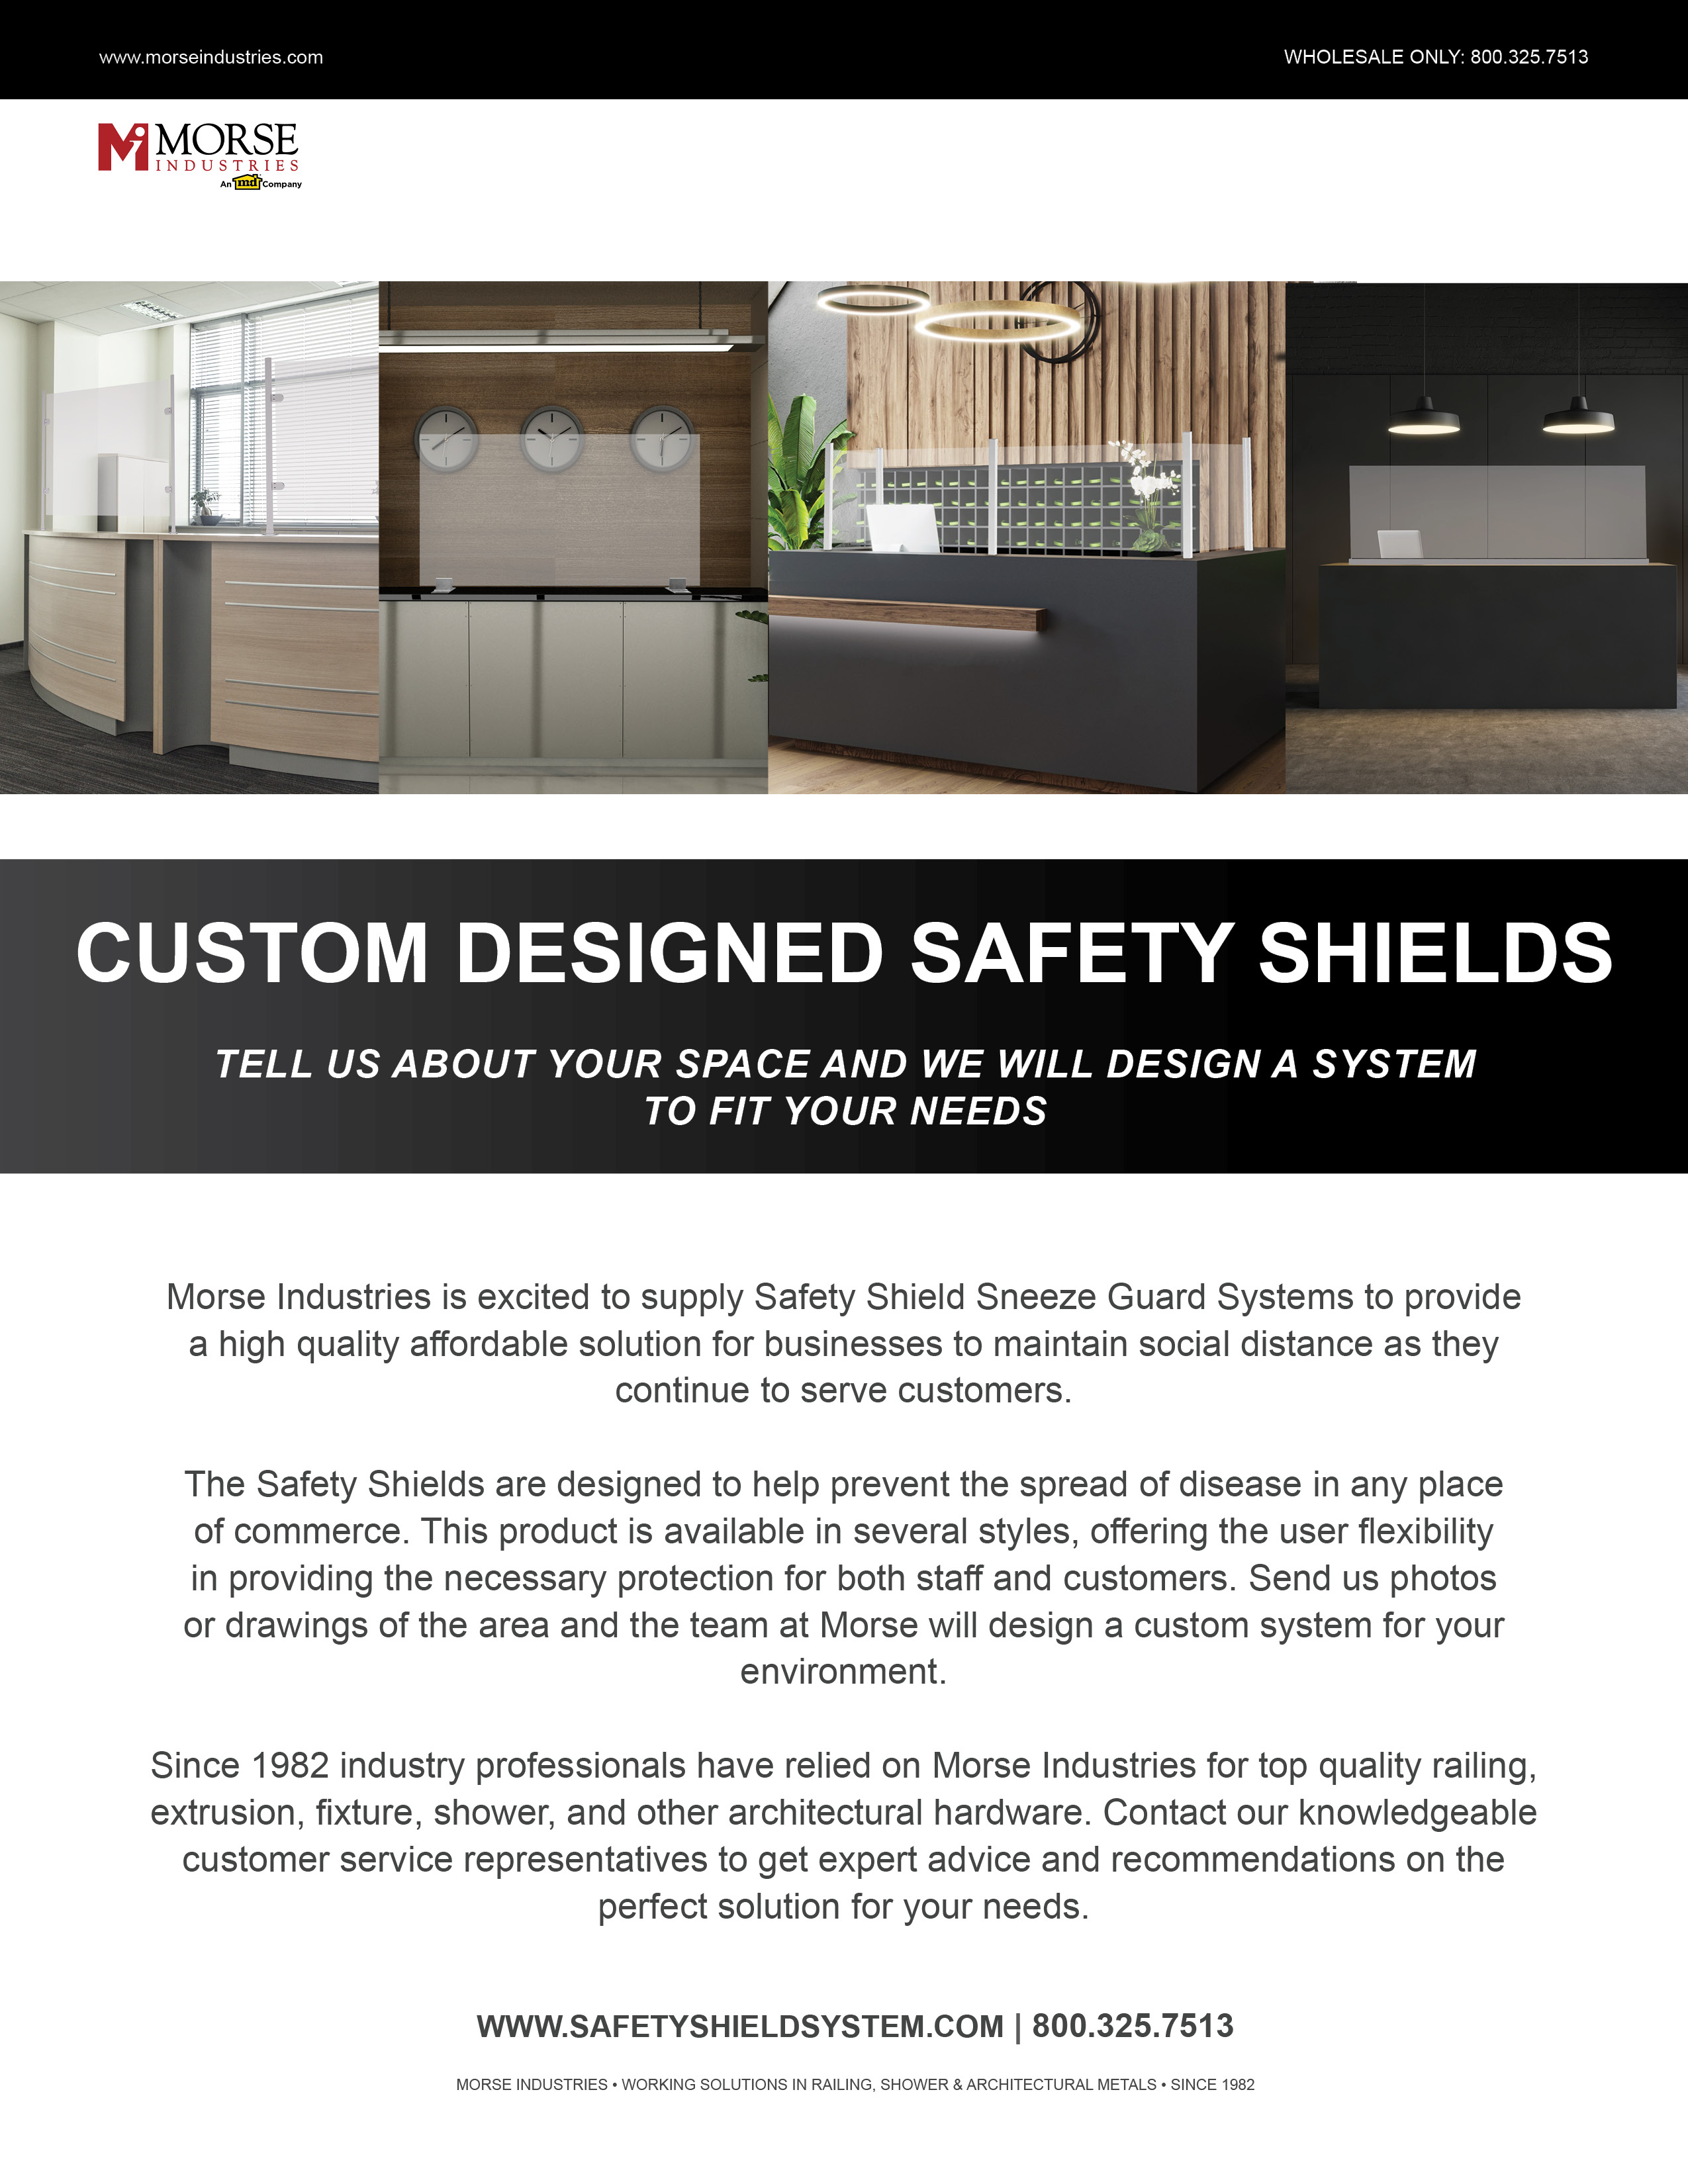 Safety Shield Design Guide